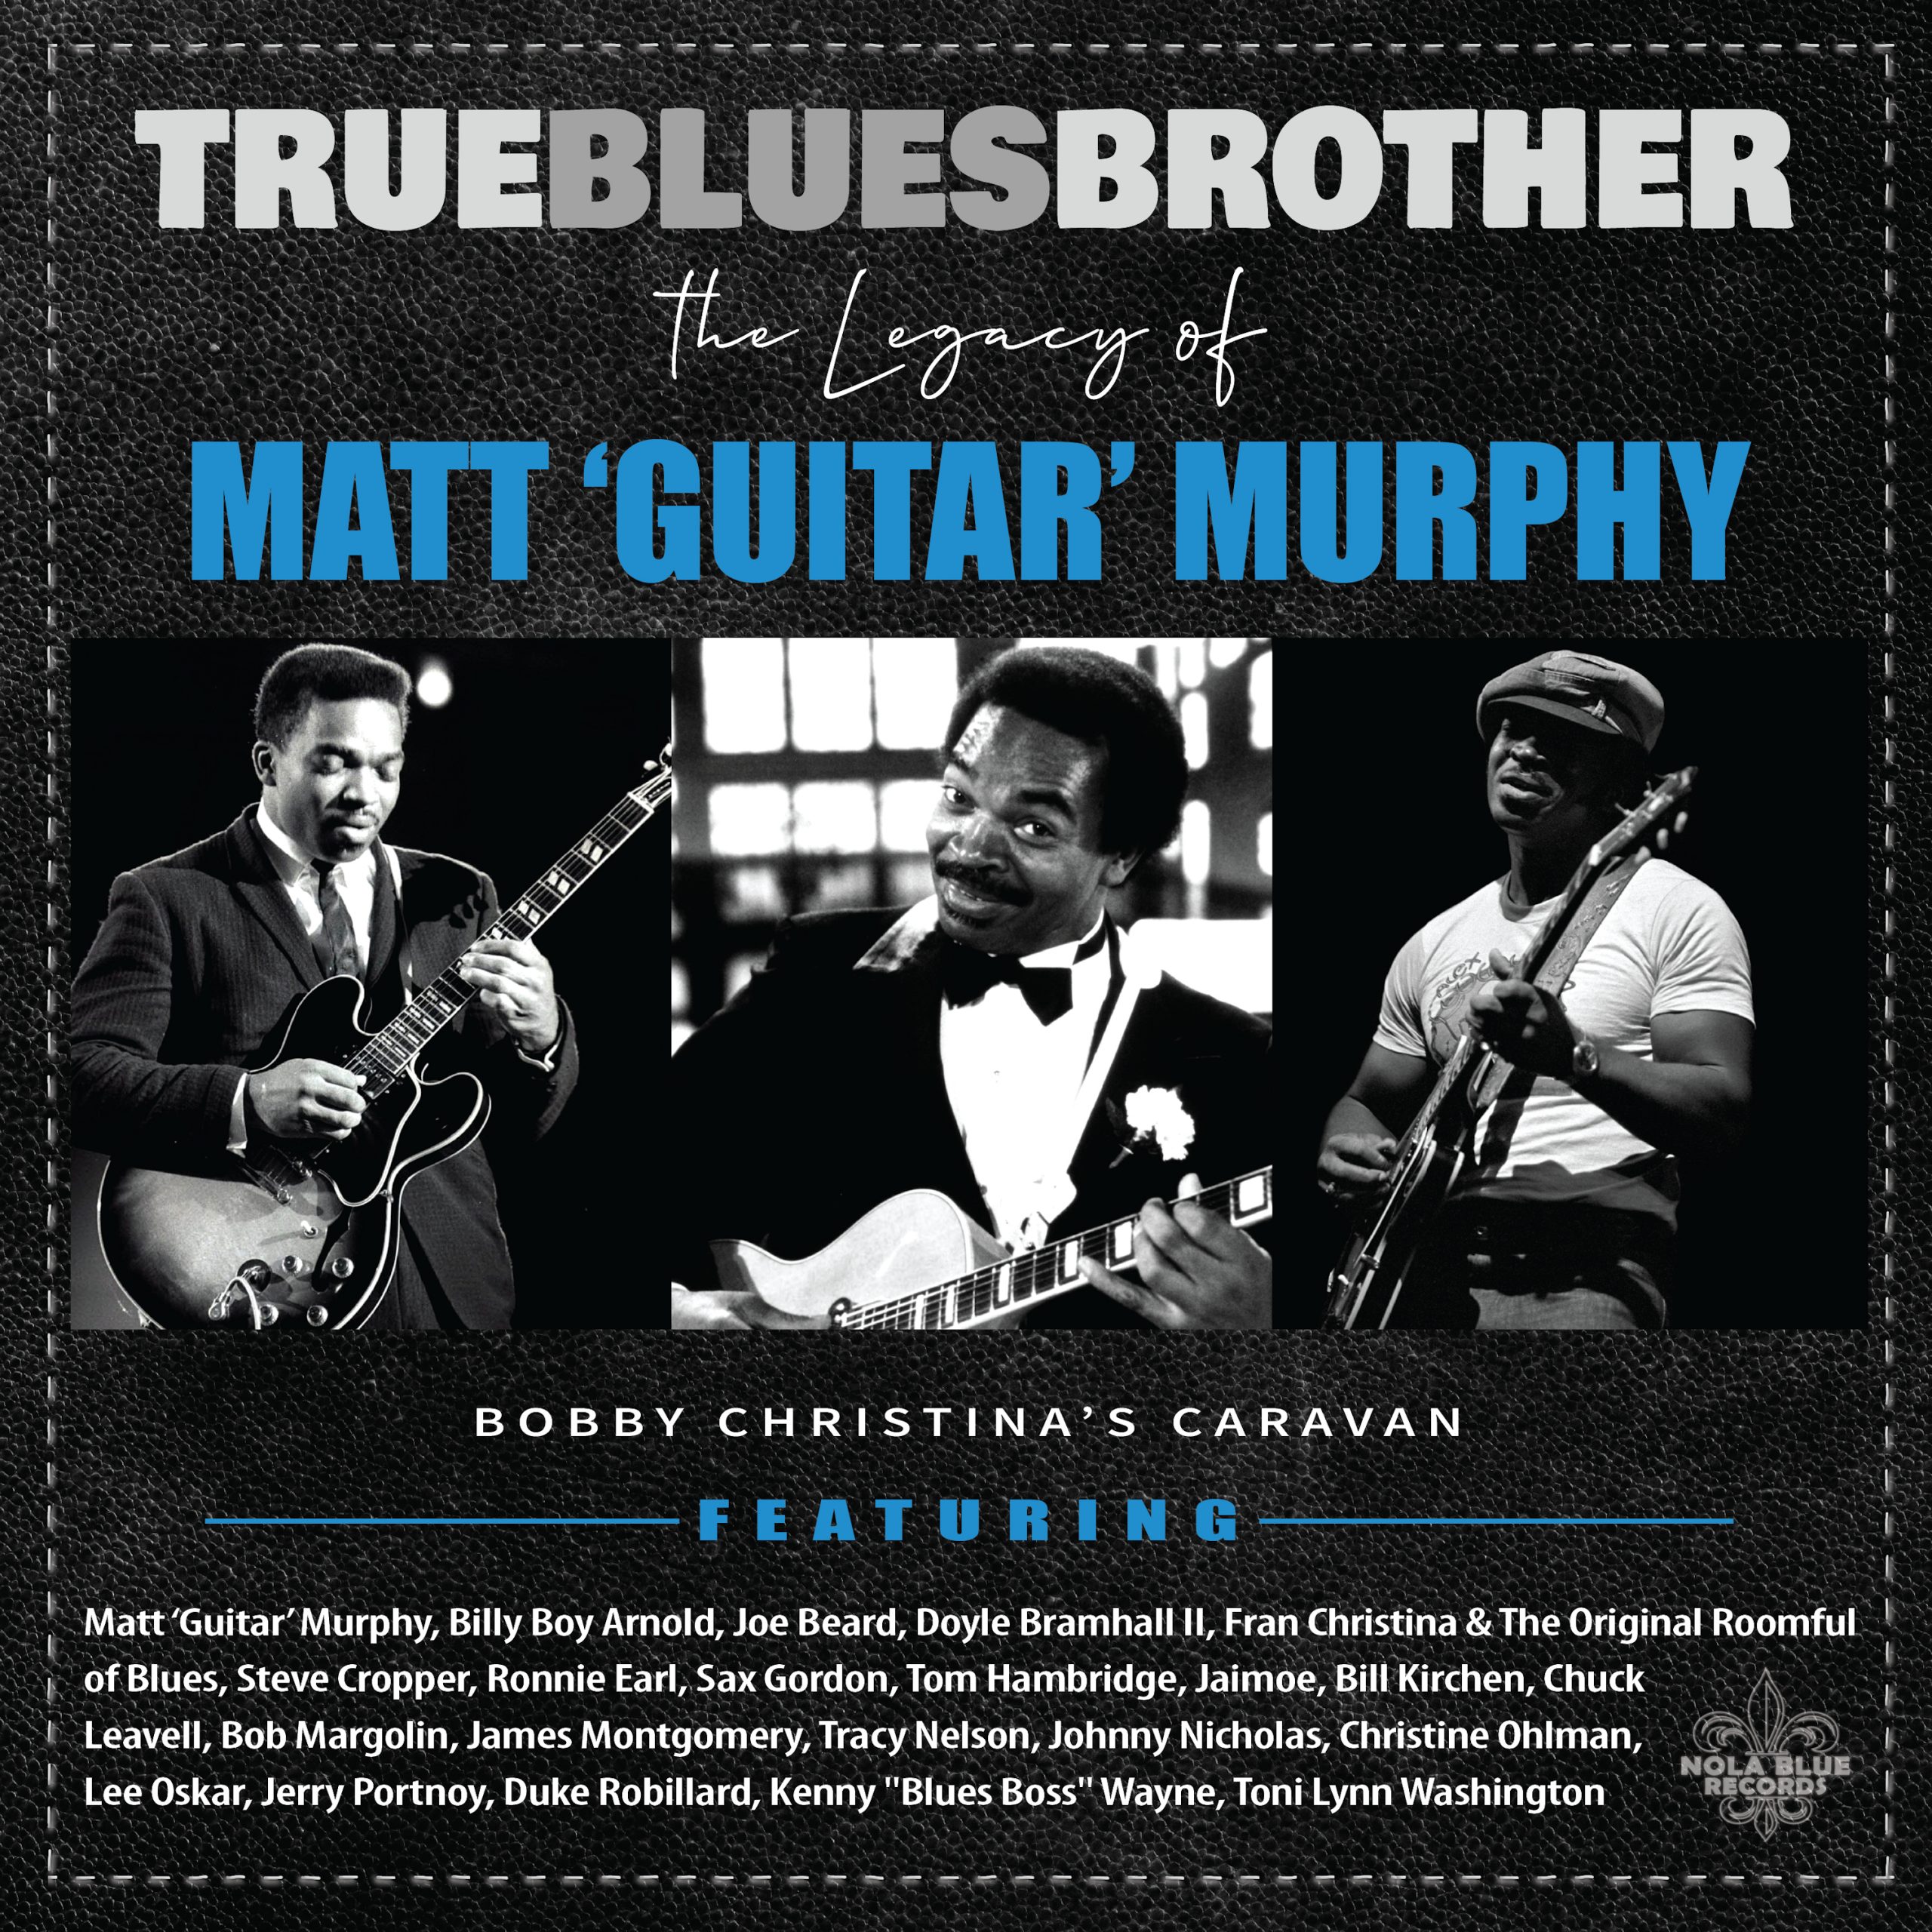 True Blues Brother - The Legacy of Matt “Guitar” Murphy